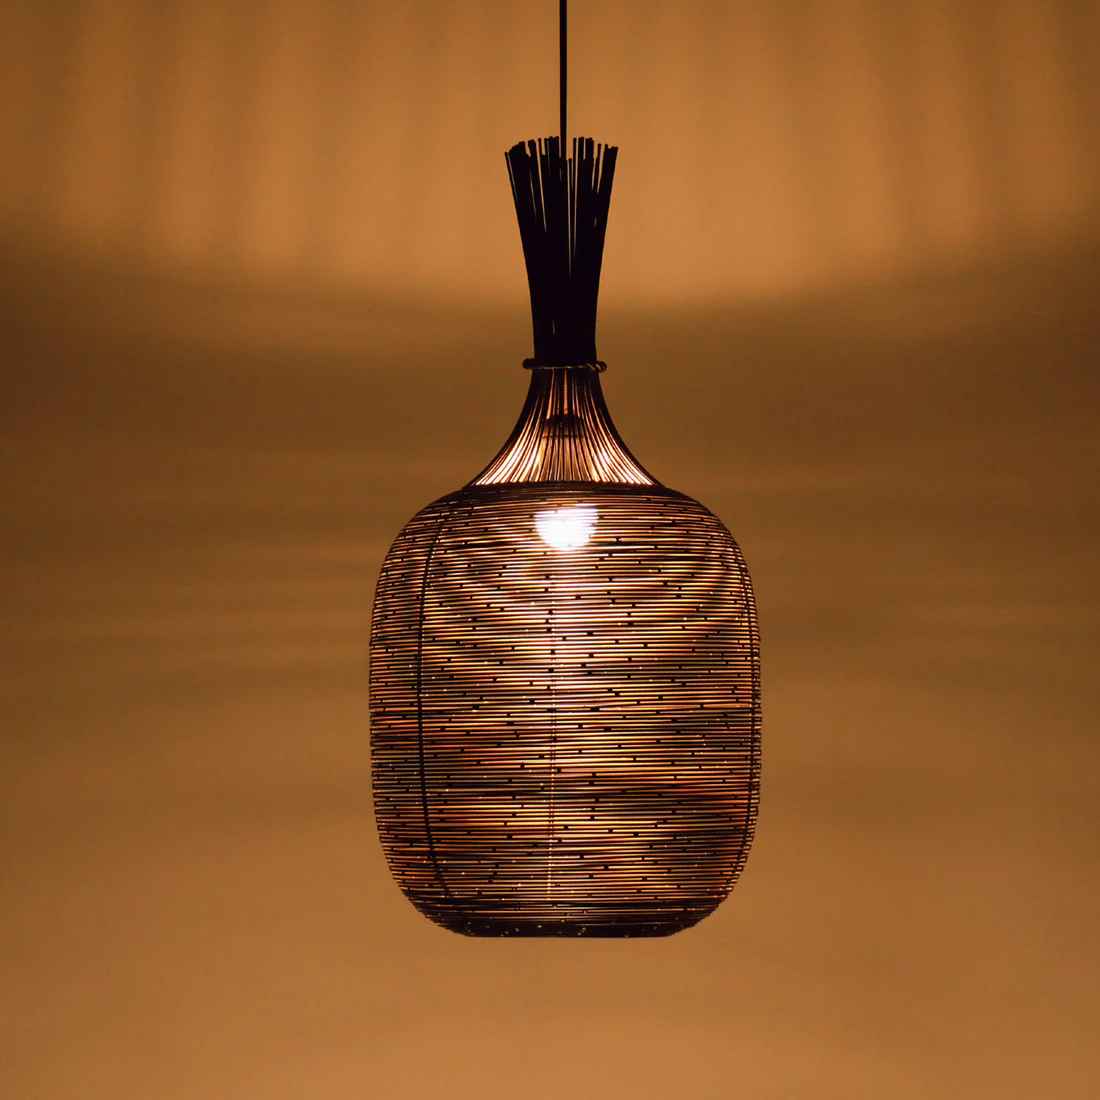 Klec Bottle Hanging Lamp